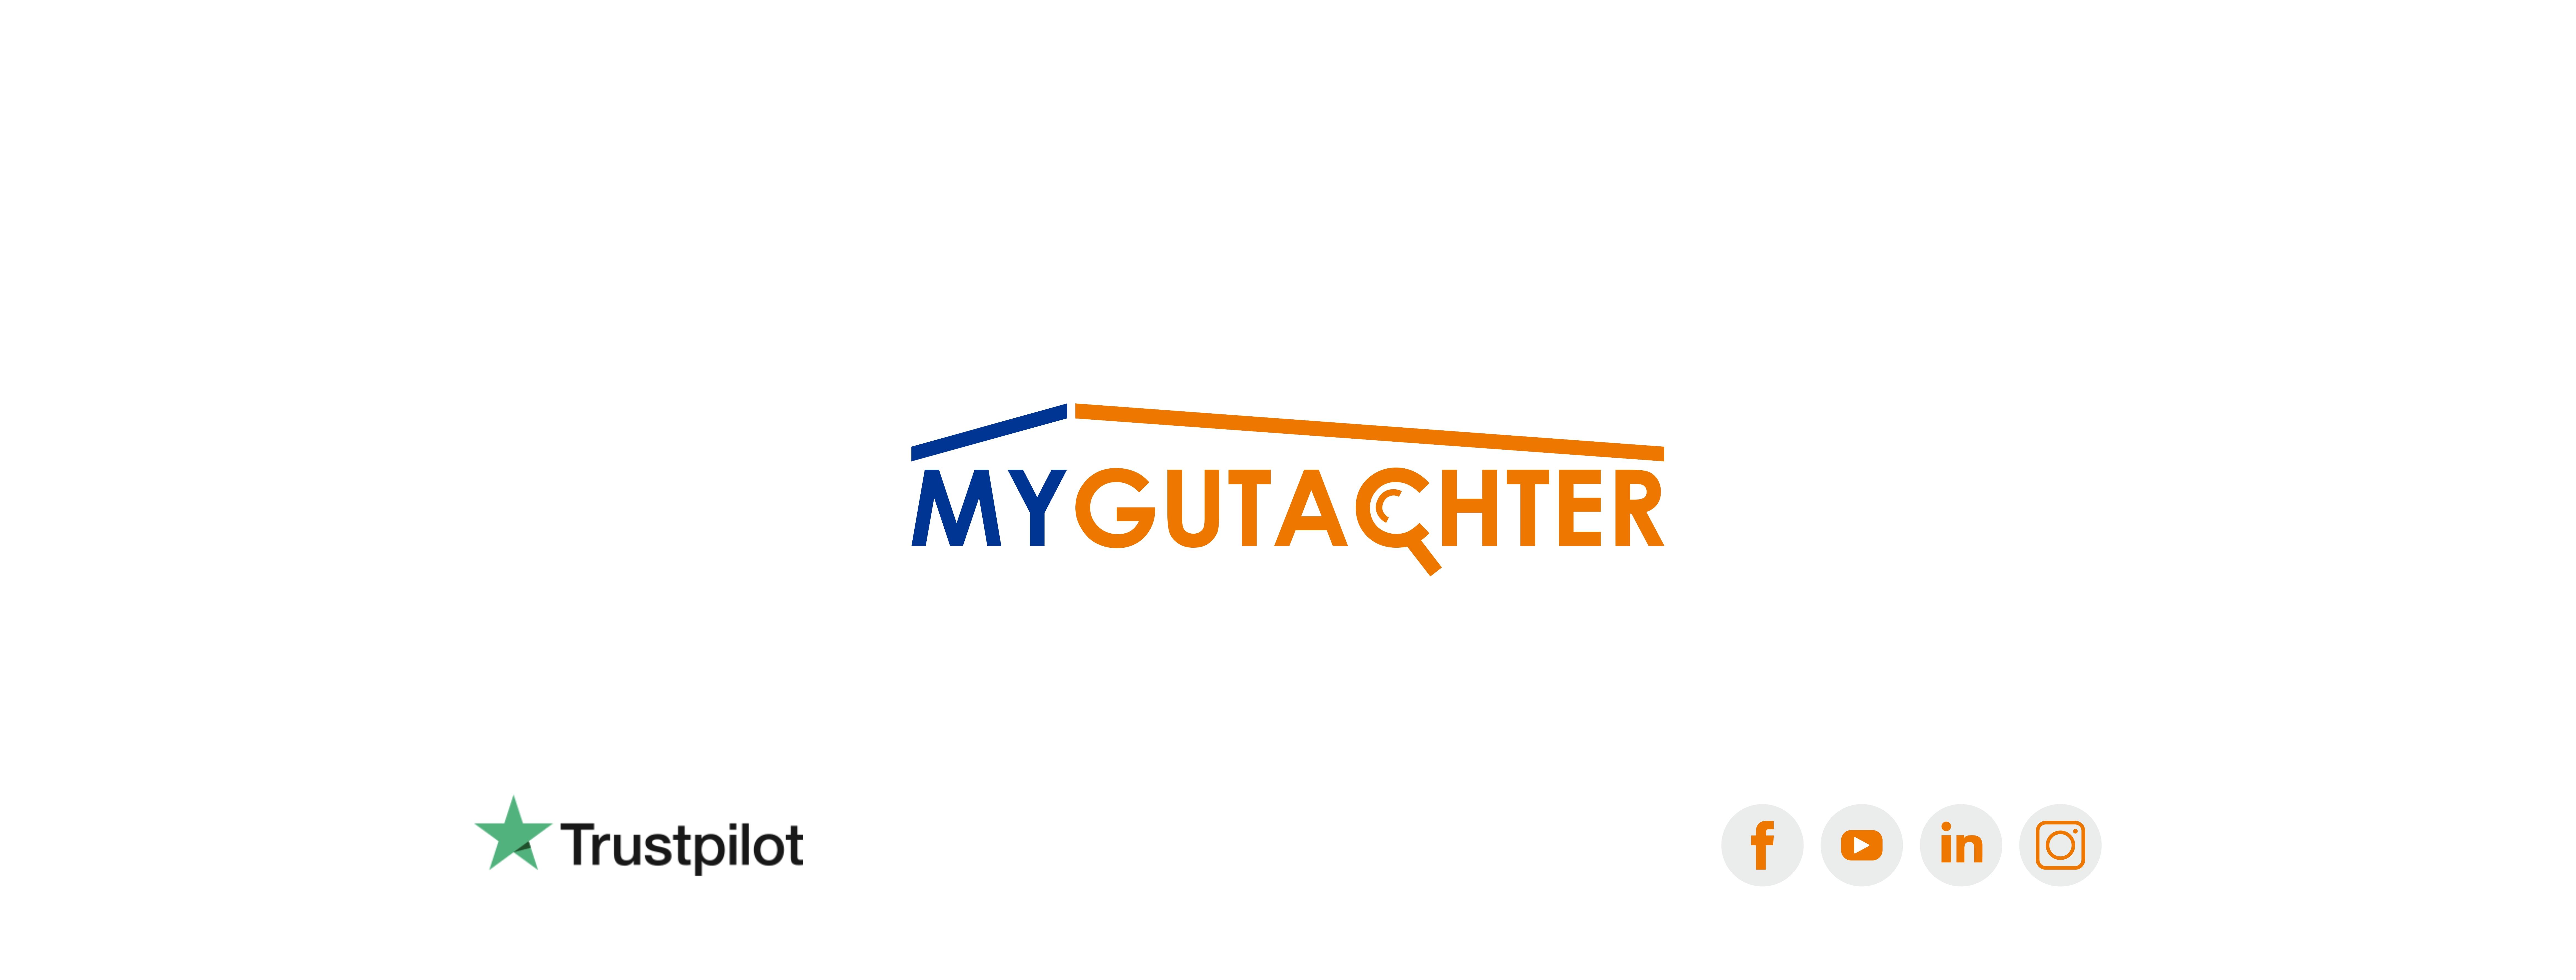 MyGutachter / startup from Herford / Background